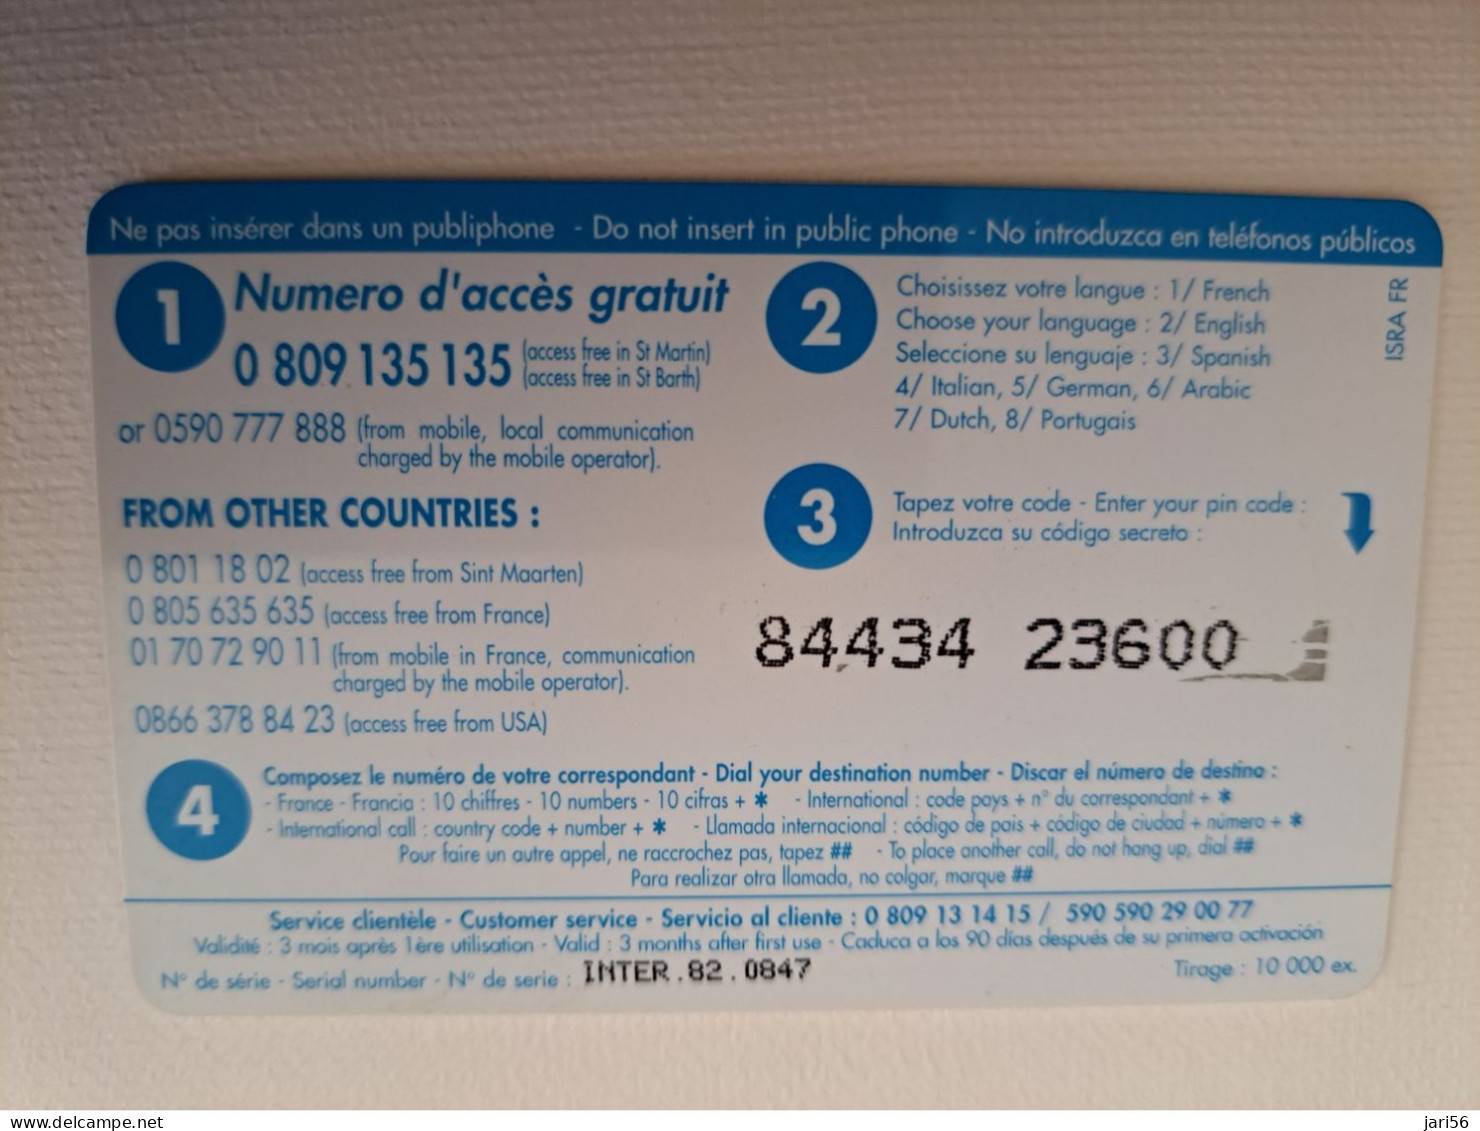 ST MARTIN / INTERCARD  3 EURO    / CASE AGREEMENT       NO 082  Fine Used Card    ** 15140** - Antillen (Frans)